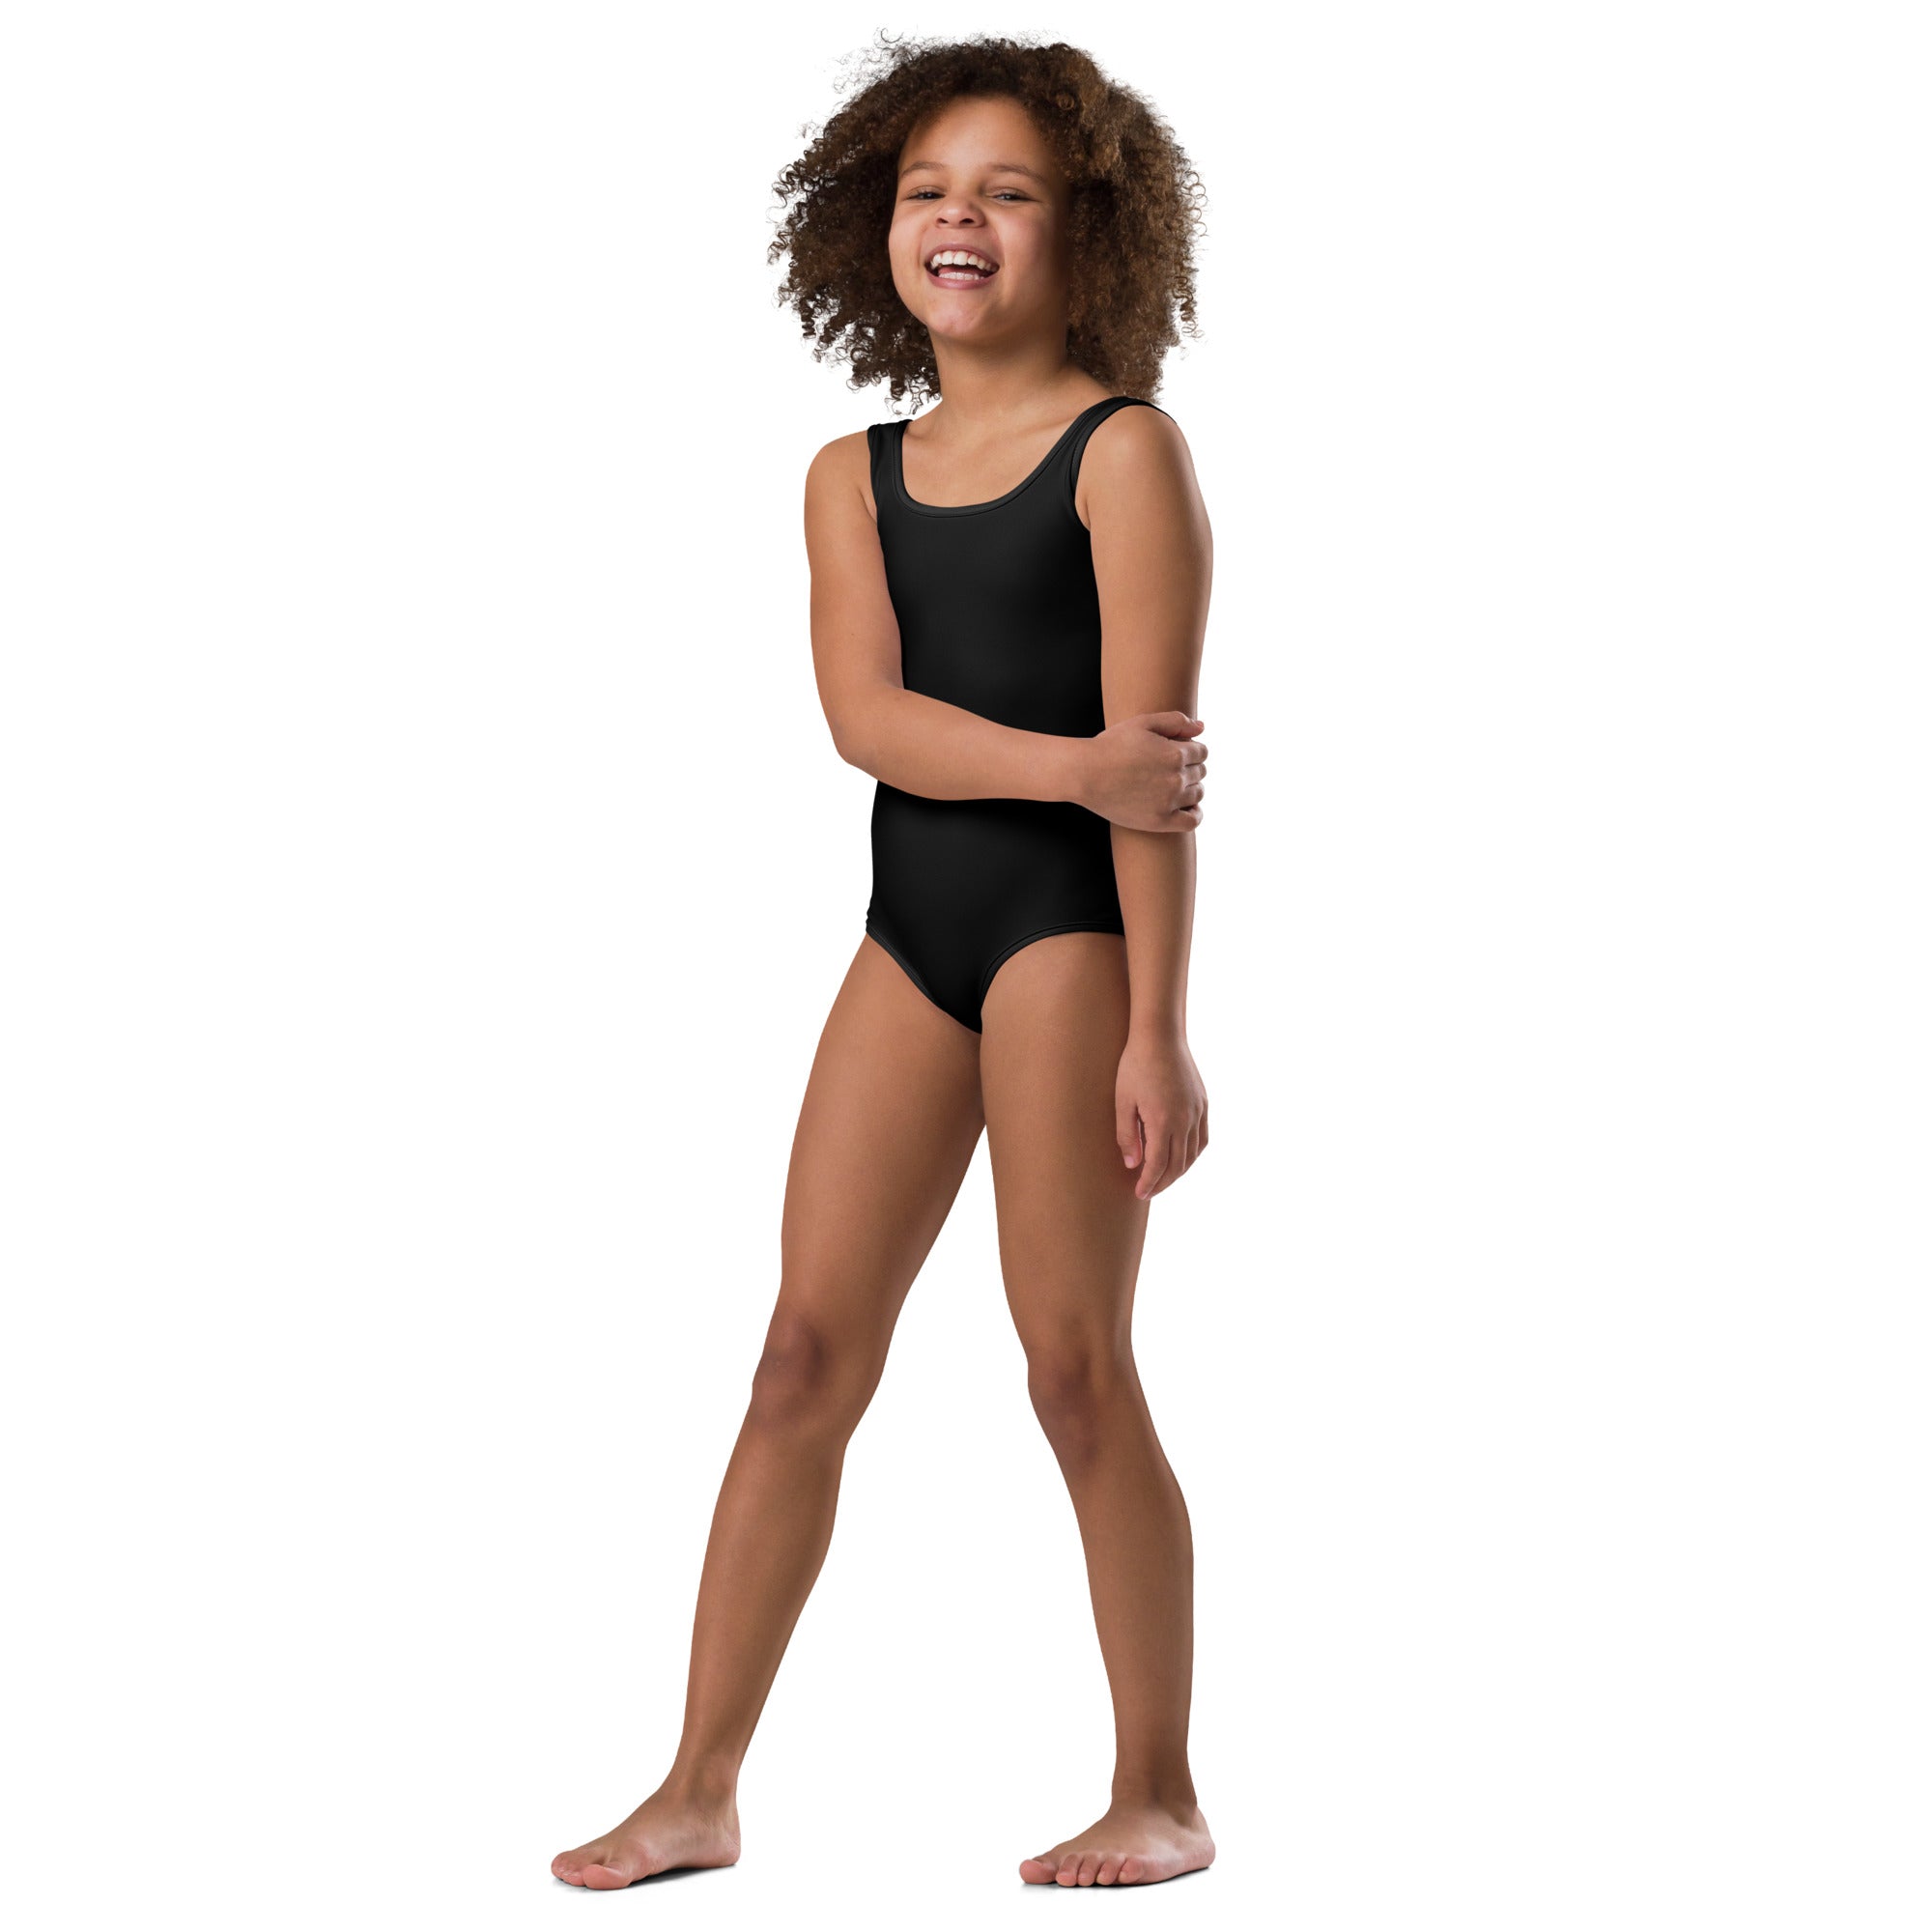 All-Over Print Kids Swimsuit- Black